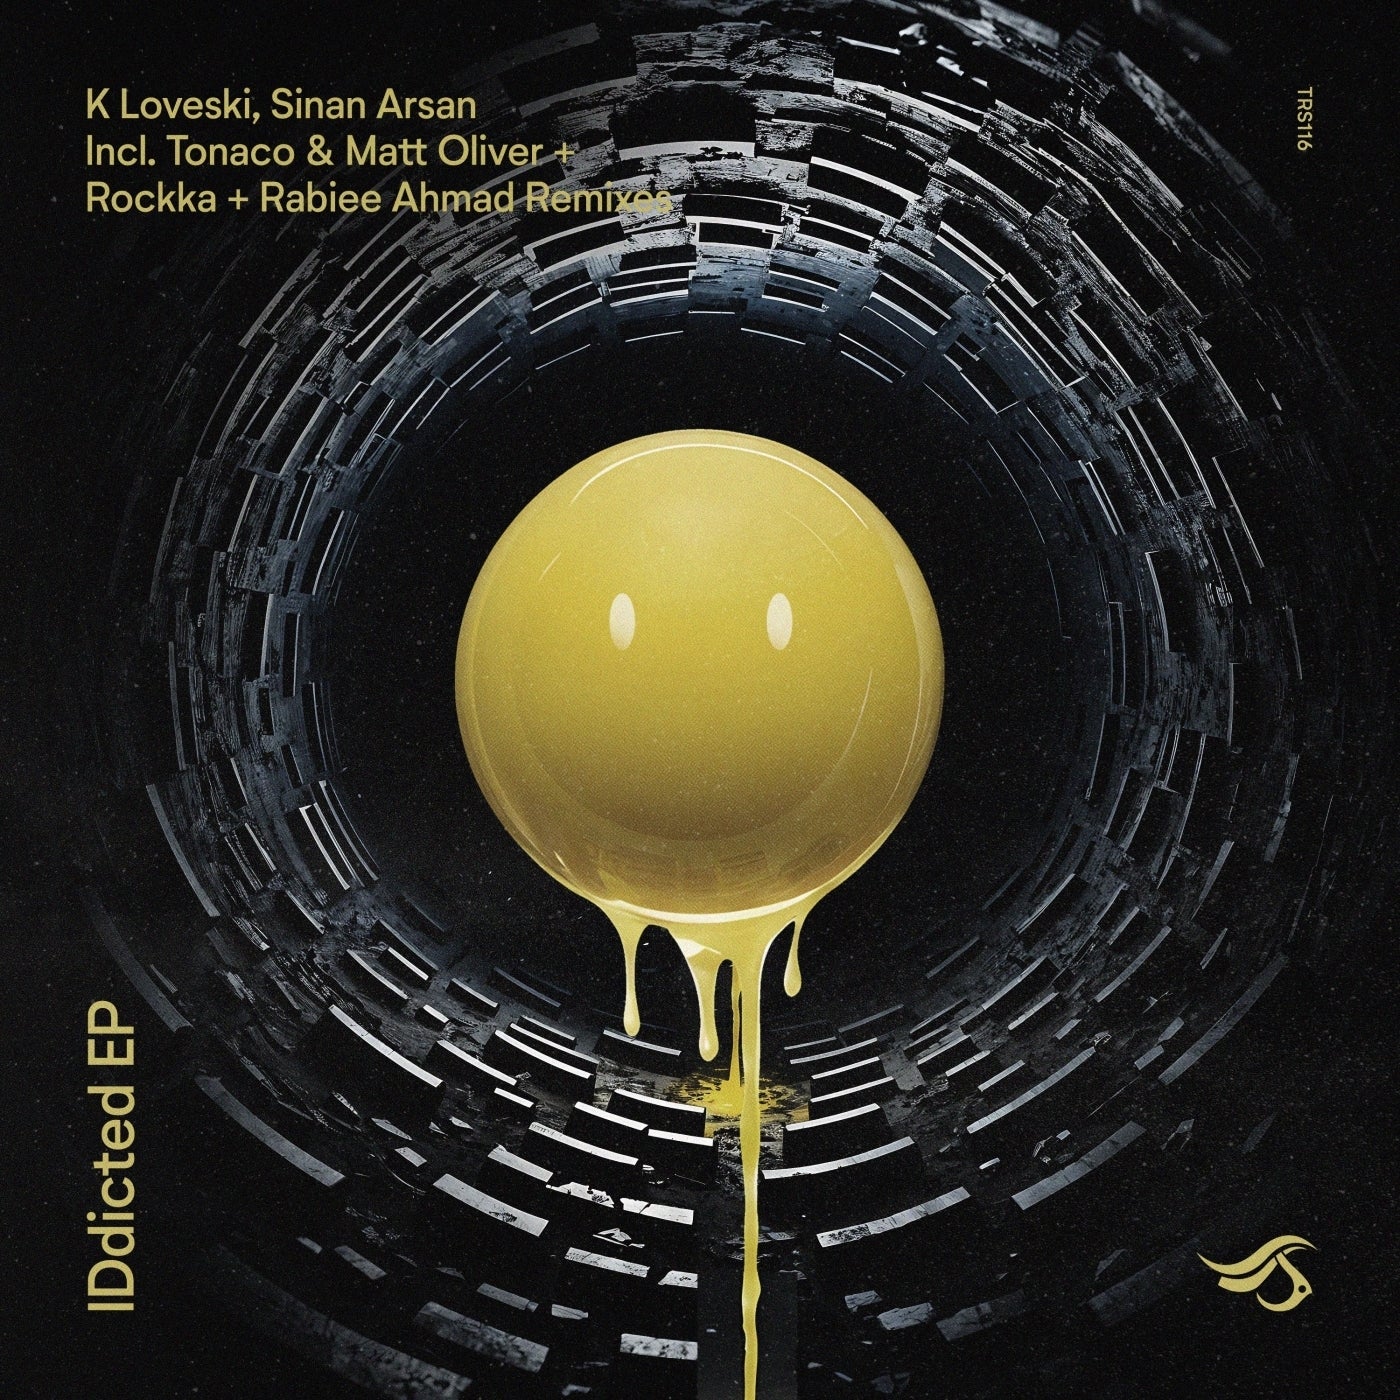 Cover - K Loveski, Sinan Arsan - IDdicted (Original Mix)